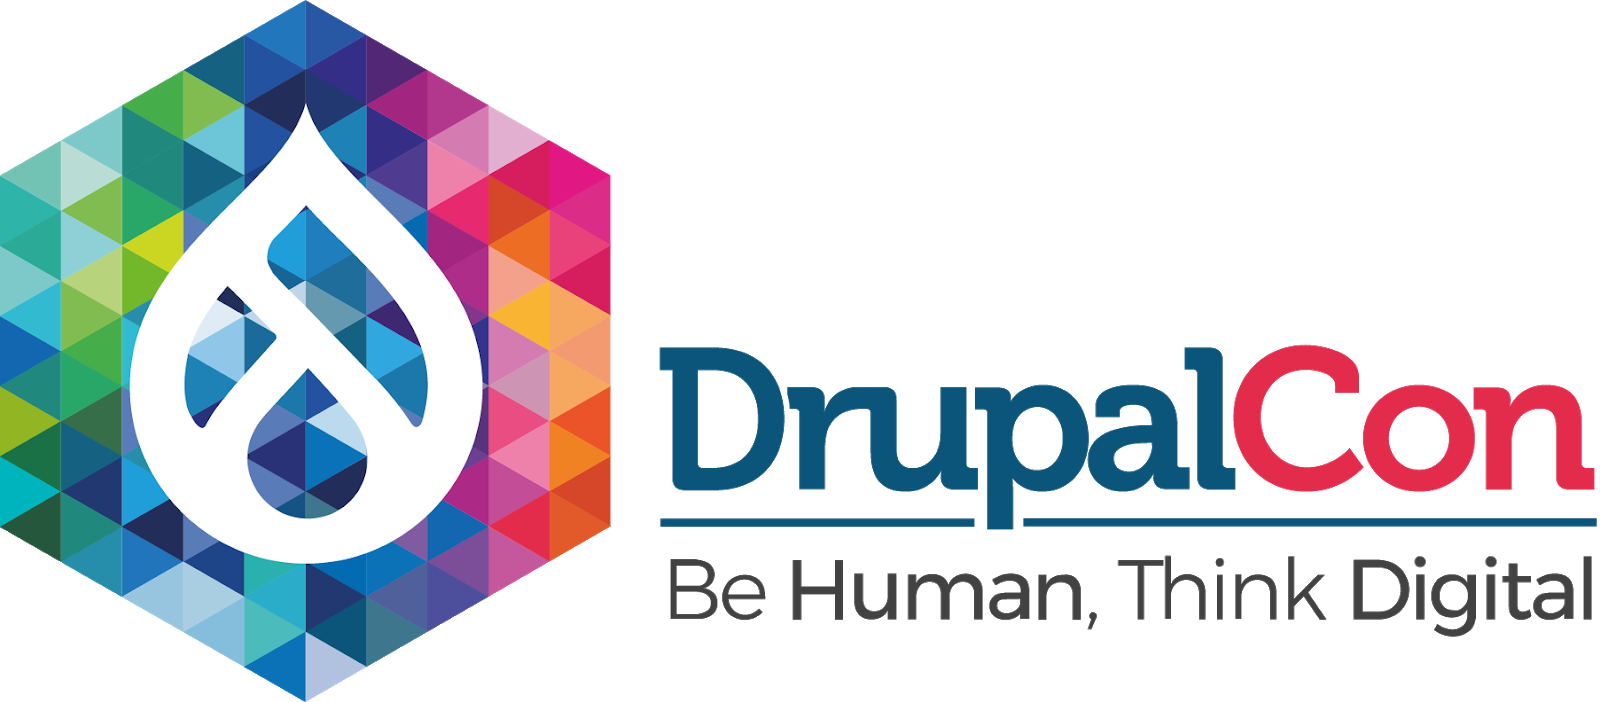 Drupalcon brand lockup